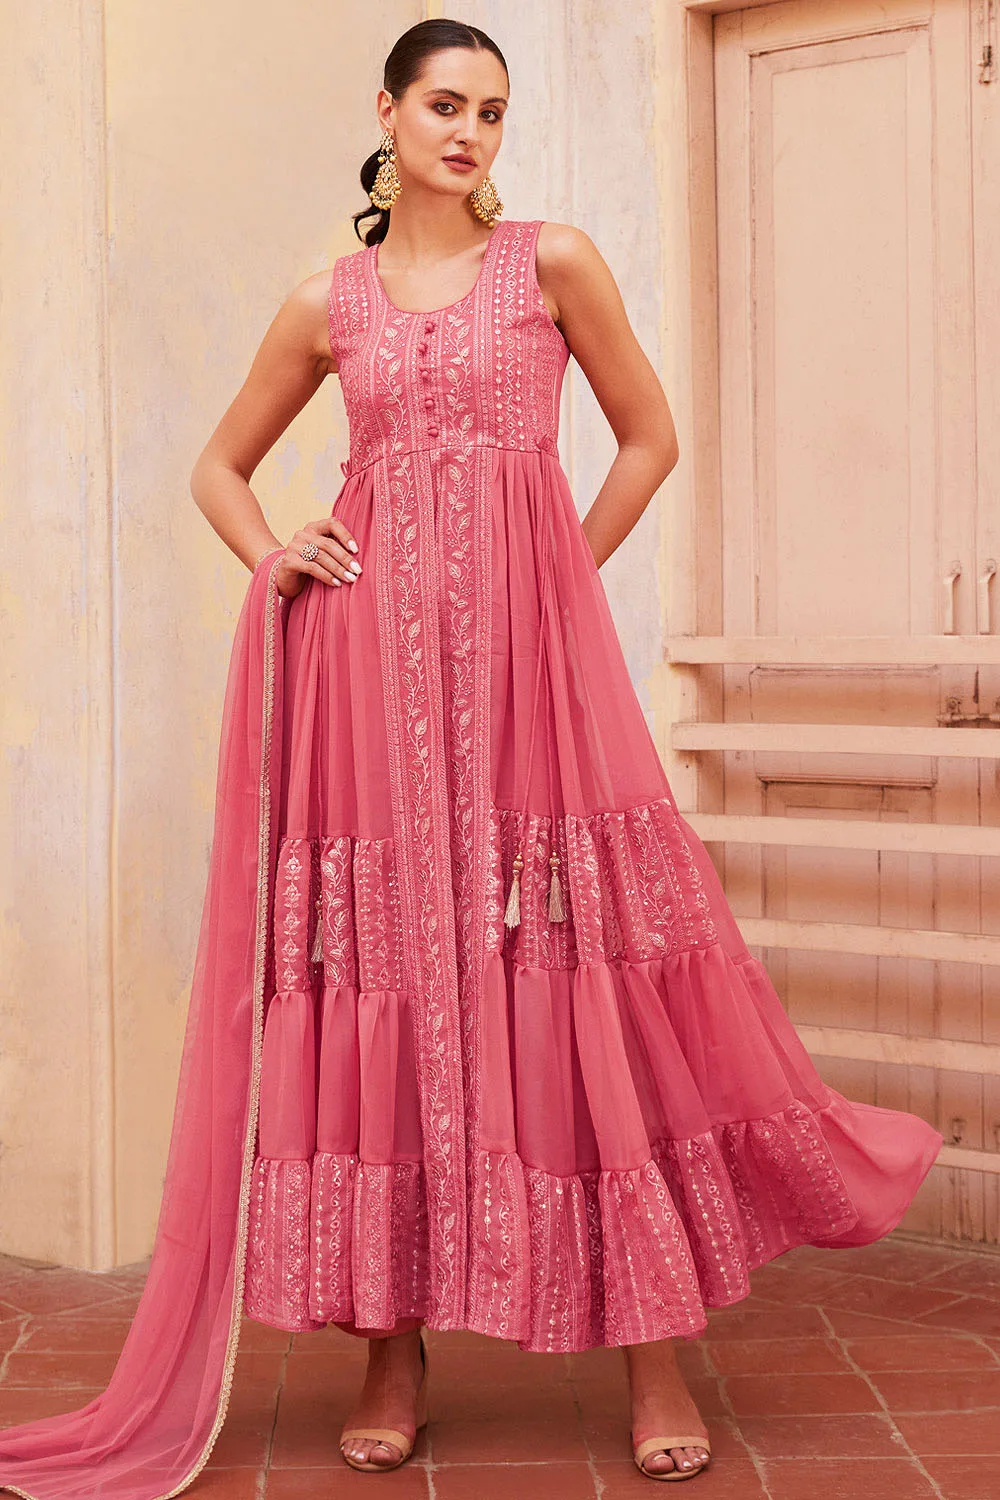 Pink Indo-western dress